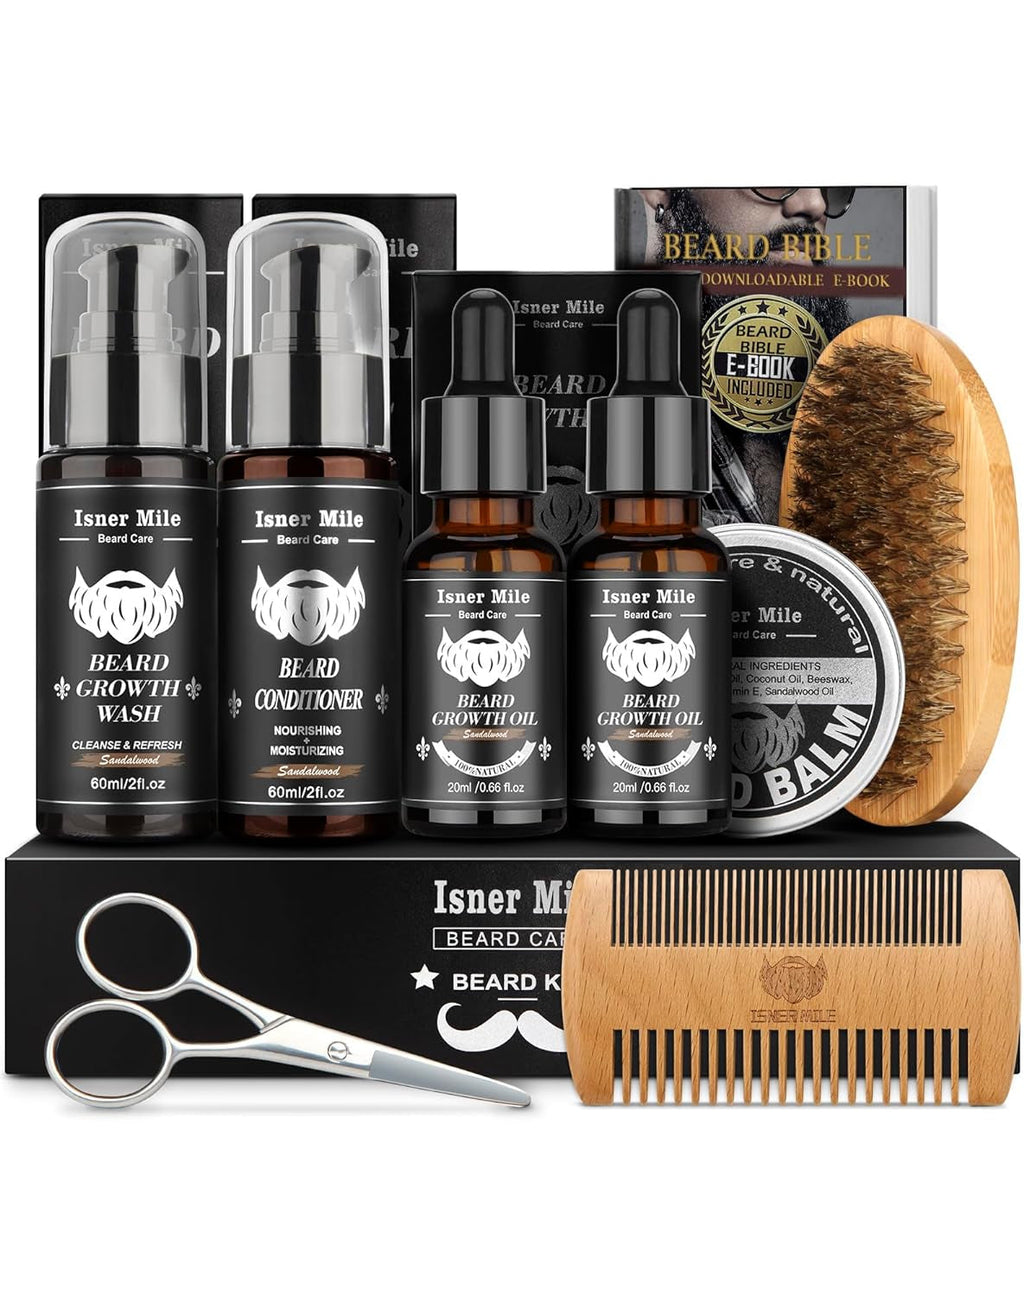 Valentines Day Gifts for Him - Beard Grooming Kit w/Beard Oil Beard Balm  Beard Brush Beard Comb Beard Scissors - Anniversary Birthday Gifts for Men